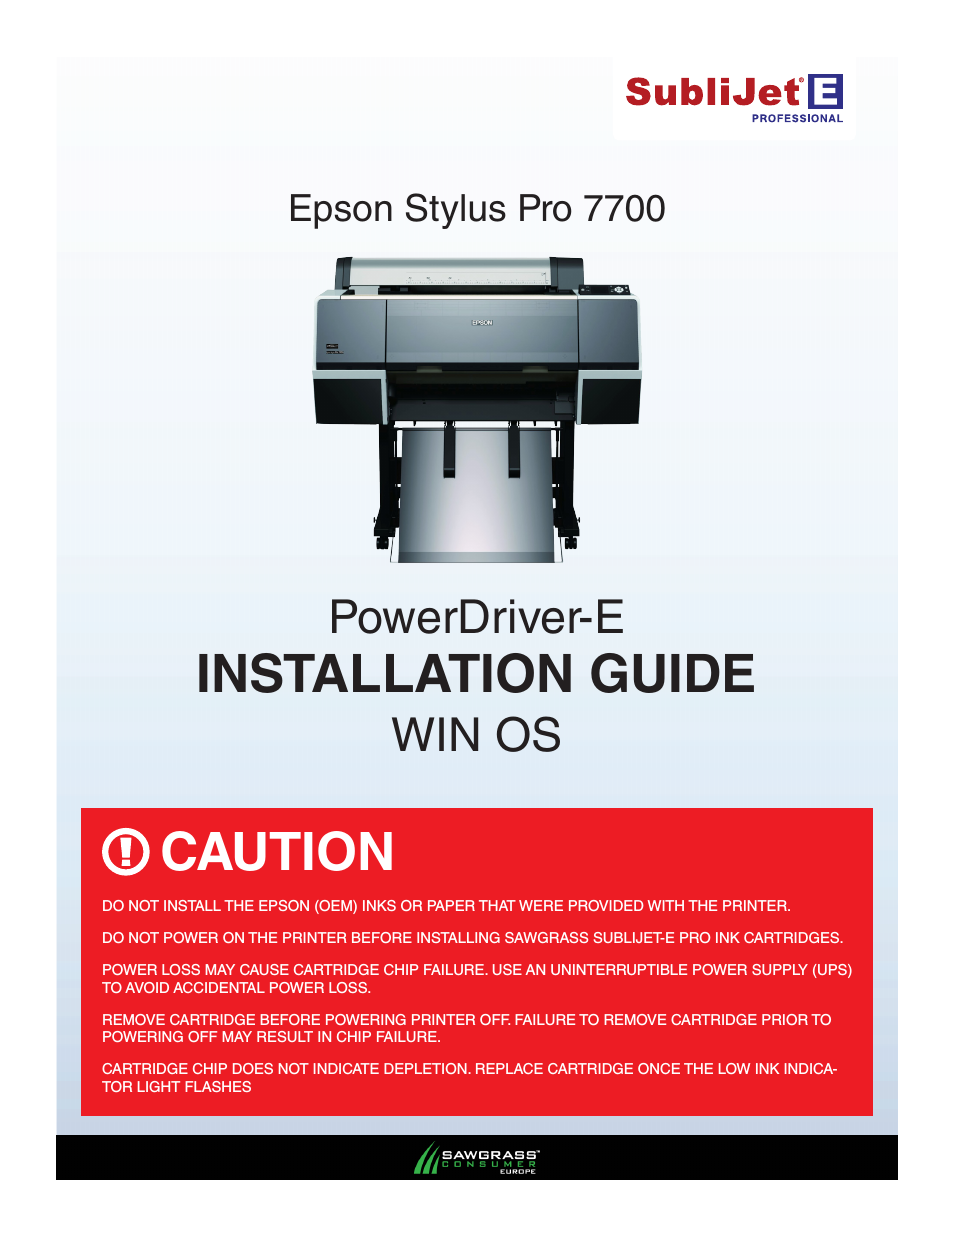 SubliJet E Epson Stylus Pro 7700 (Windows Power Driver Setup): Power Driver Installation Guide